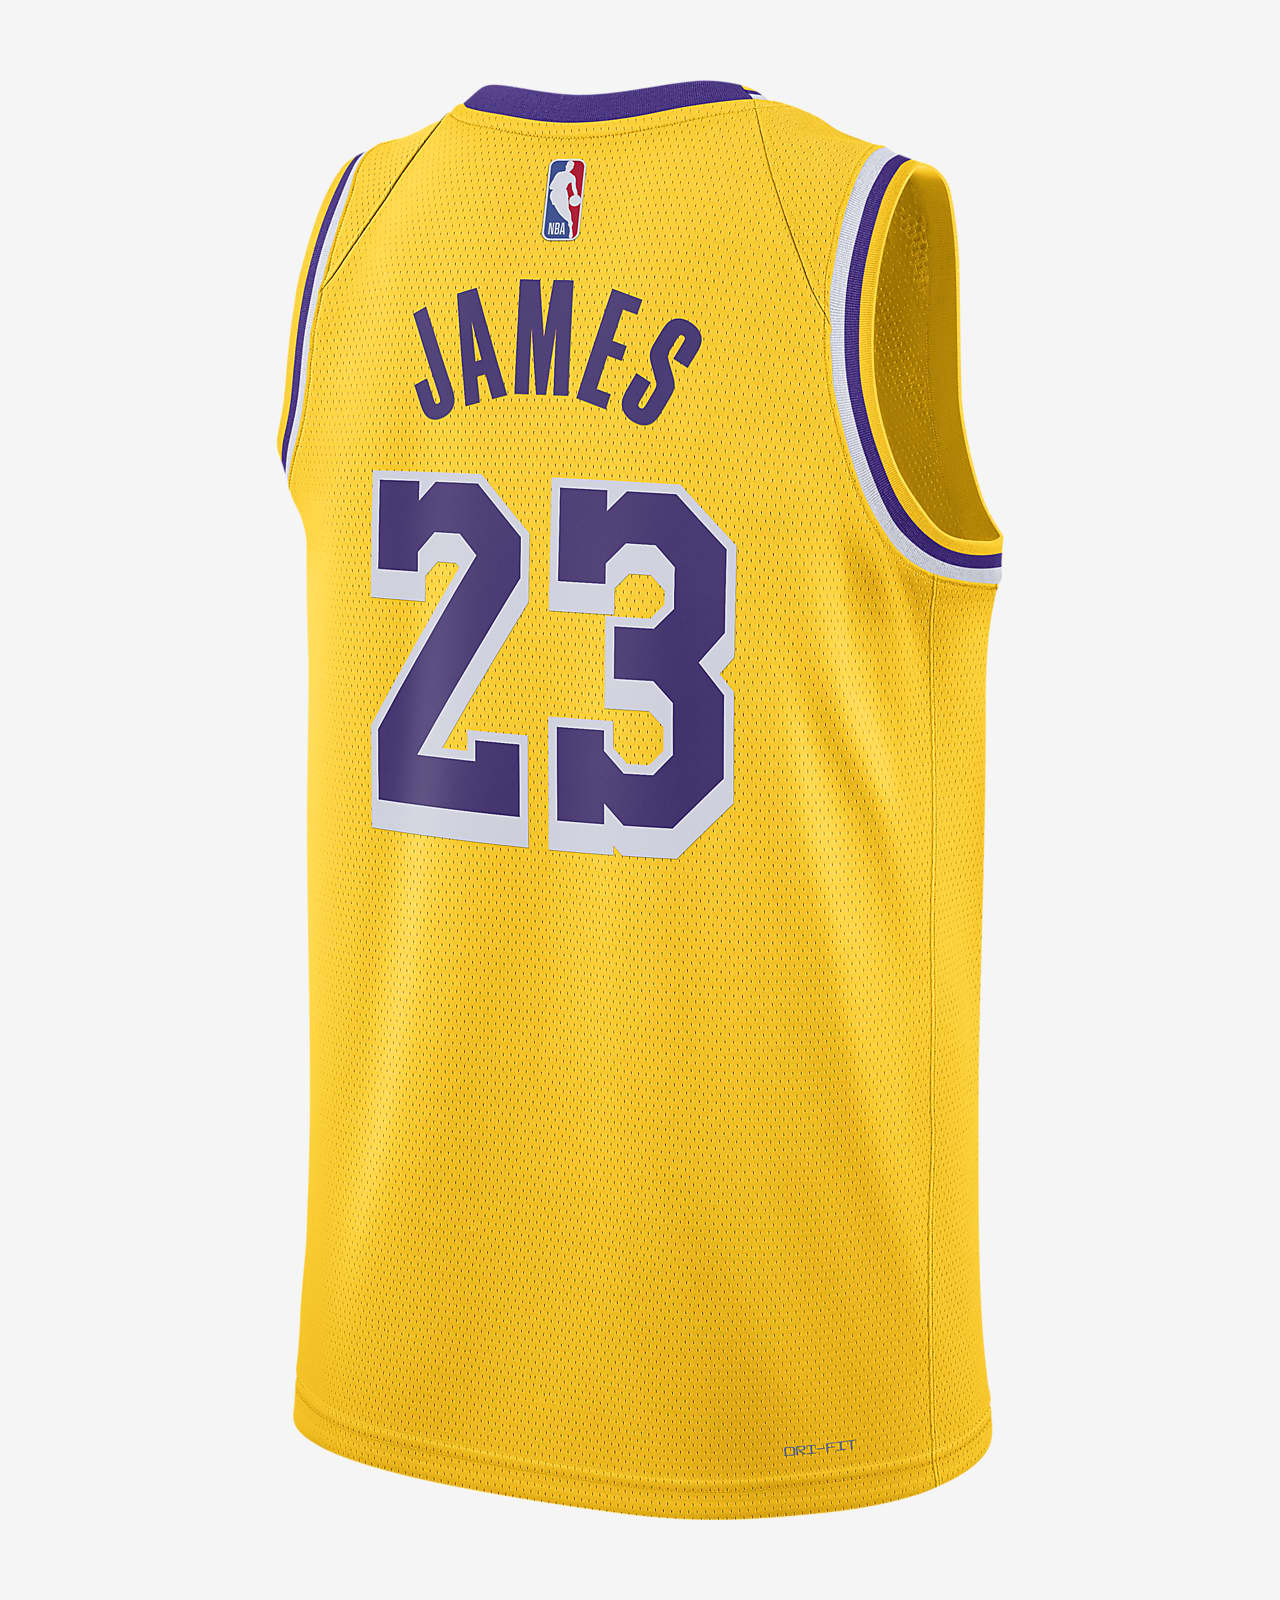 Los Angeles Lakers Equipo, Lakers camisetas, tienda, Lakers tienda, ropa